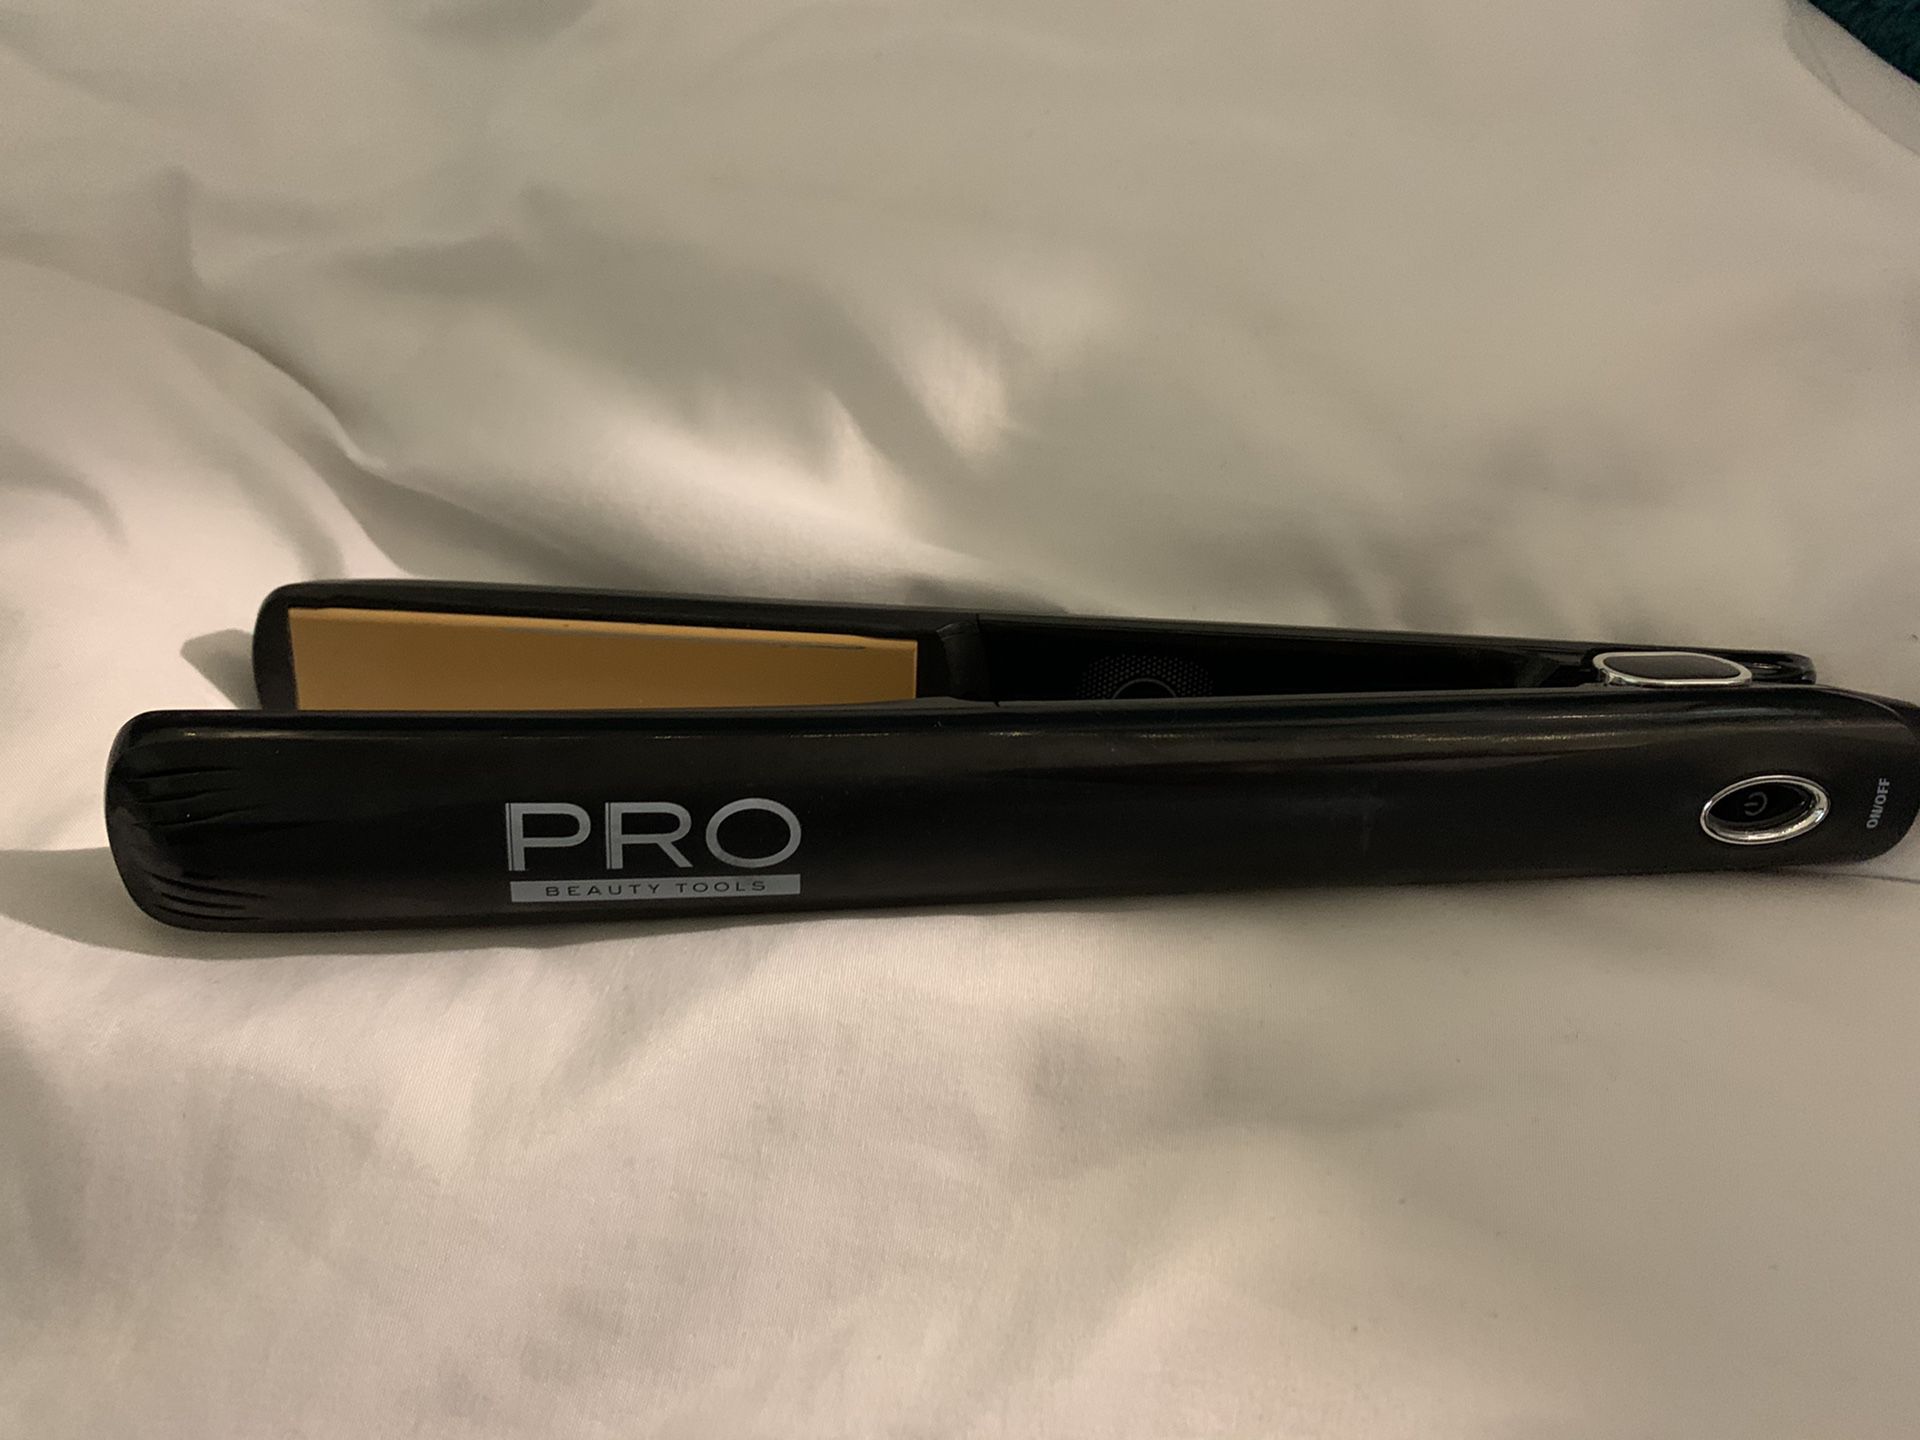 Pro beauty tool straightener